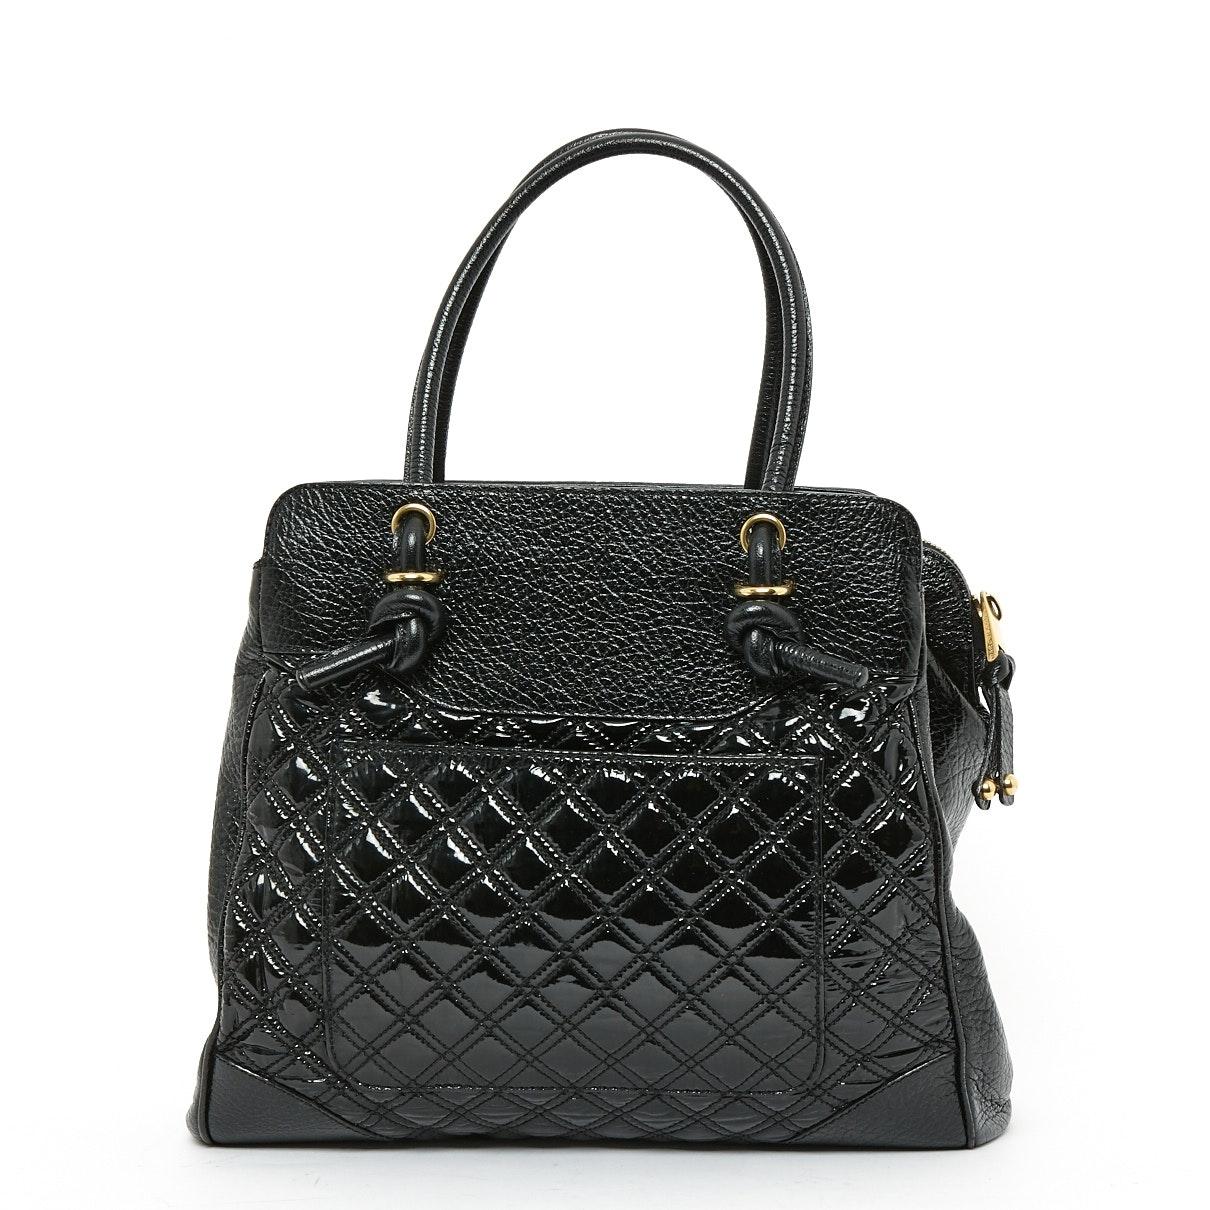 Marc Jacobs Black Patent Leather Handbag - Lyst